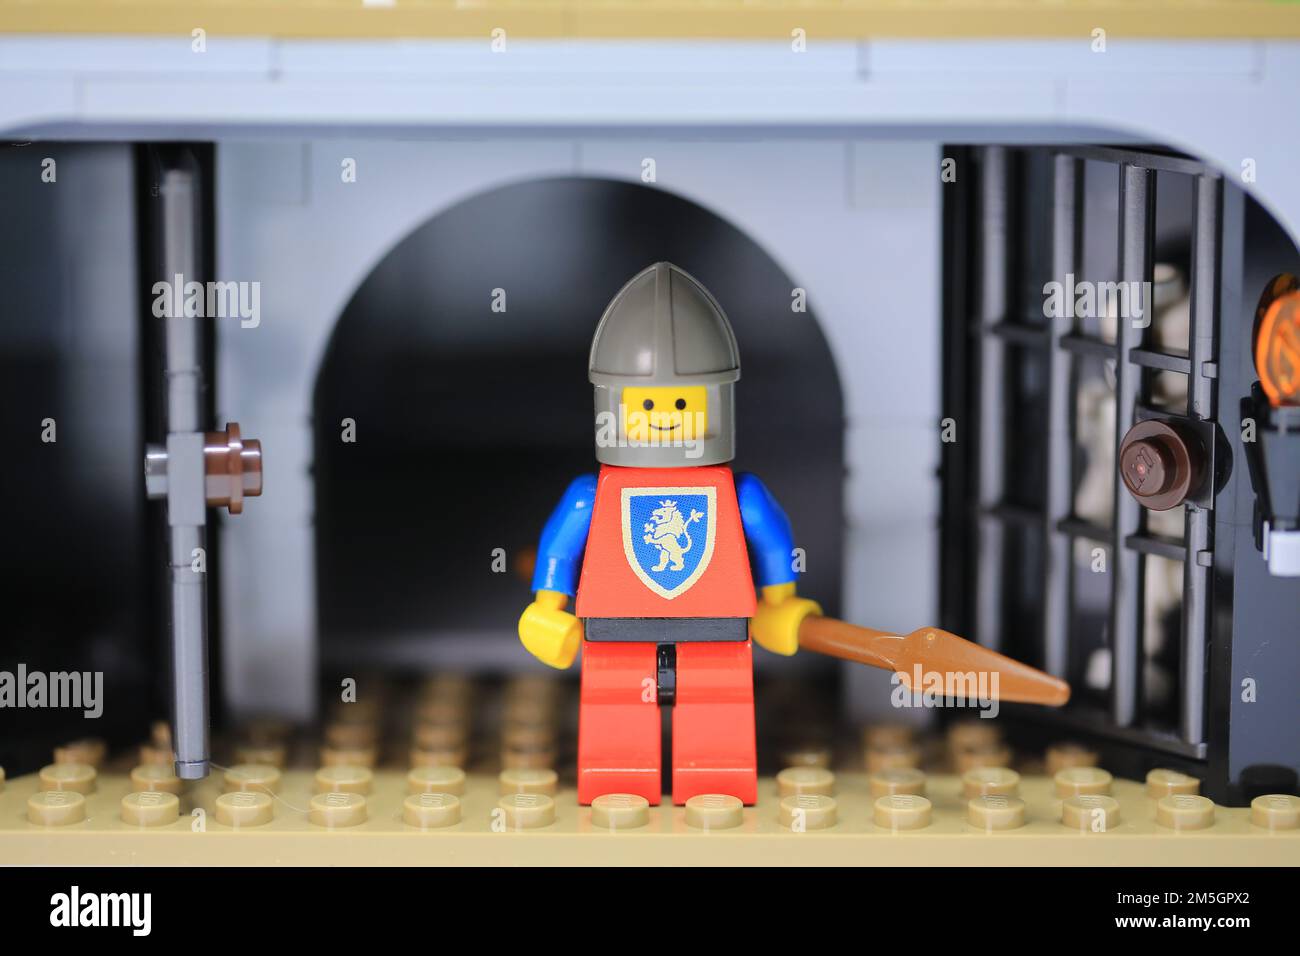 garde-chevalier lego en prison Banque D'Images